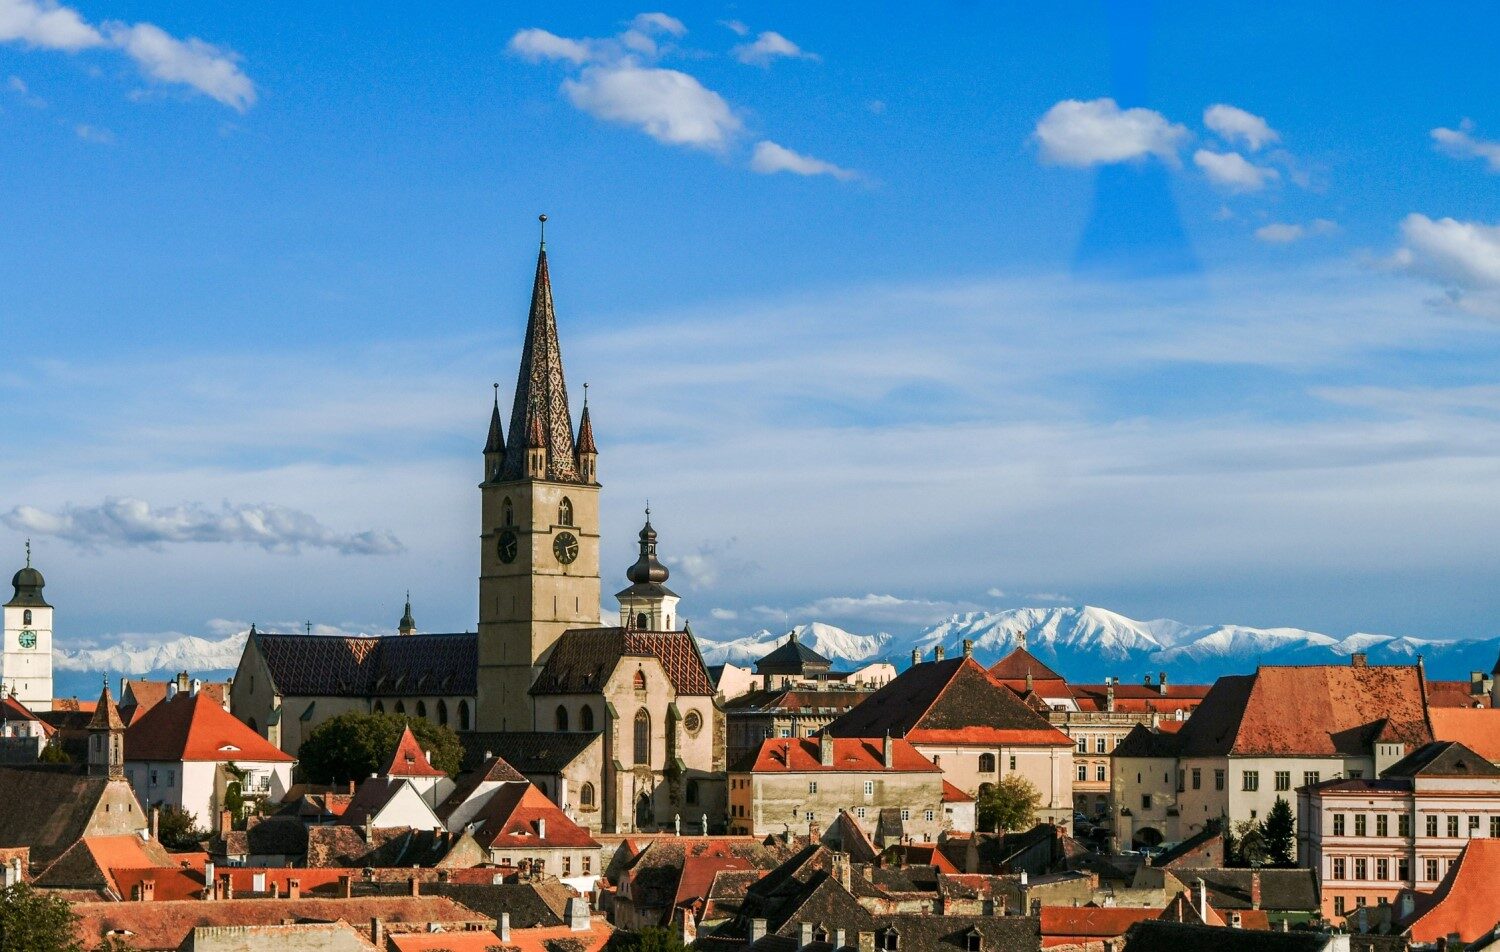 imagine de ansamblu asupra orașului Sibiu, cu turnul sfatului evidentiat si muntii inzapeziti in departare